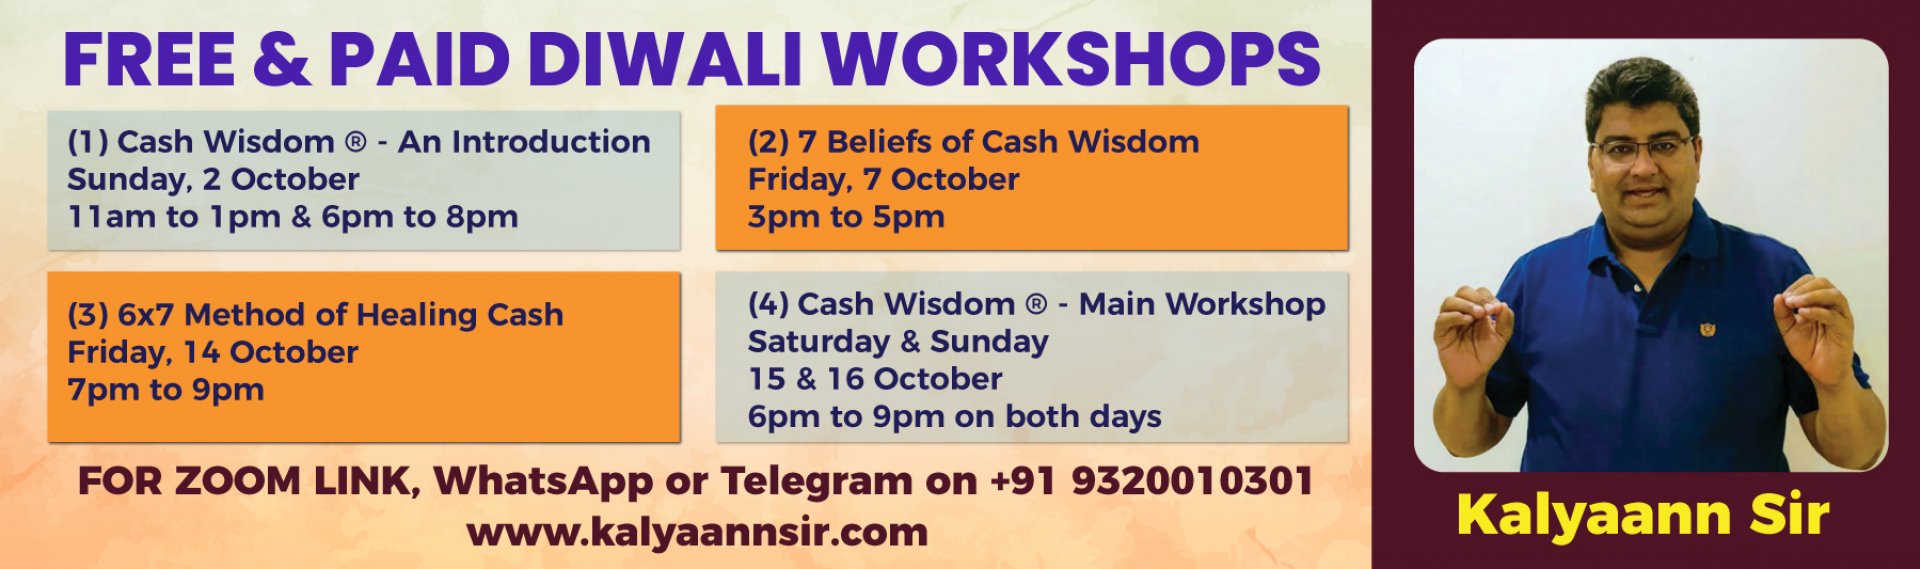 Free & Paid Diwali workshops